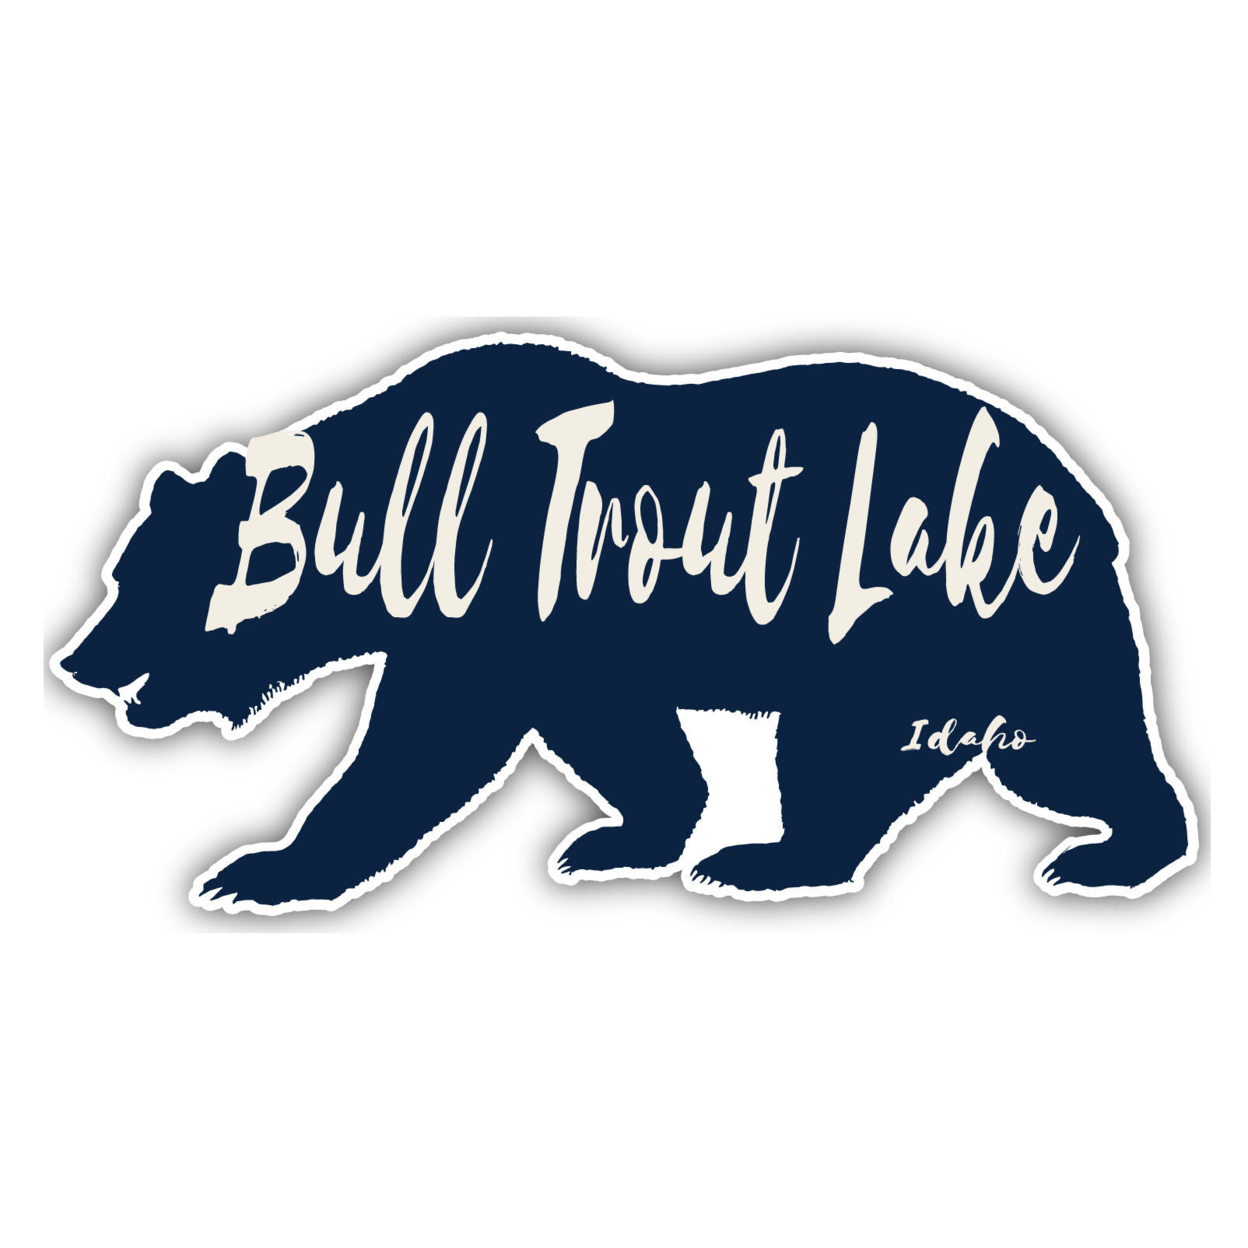 Bull Trout Lake Idaho Souvenir Decorative Stickers (Choose Theme And Size) - Single Unit, 6-Inch, Bear